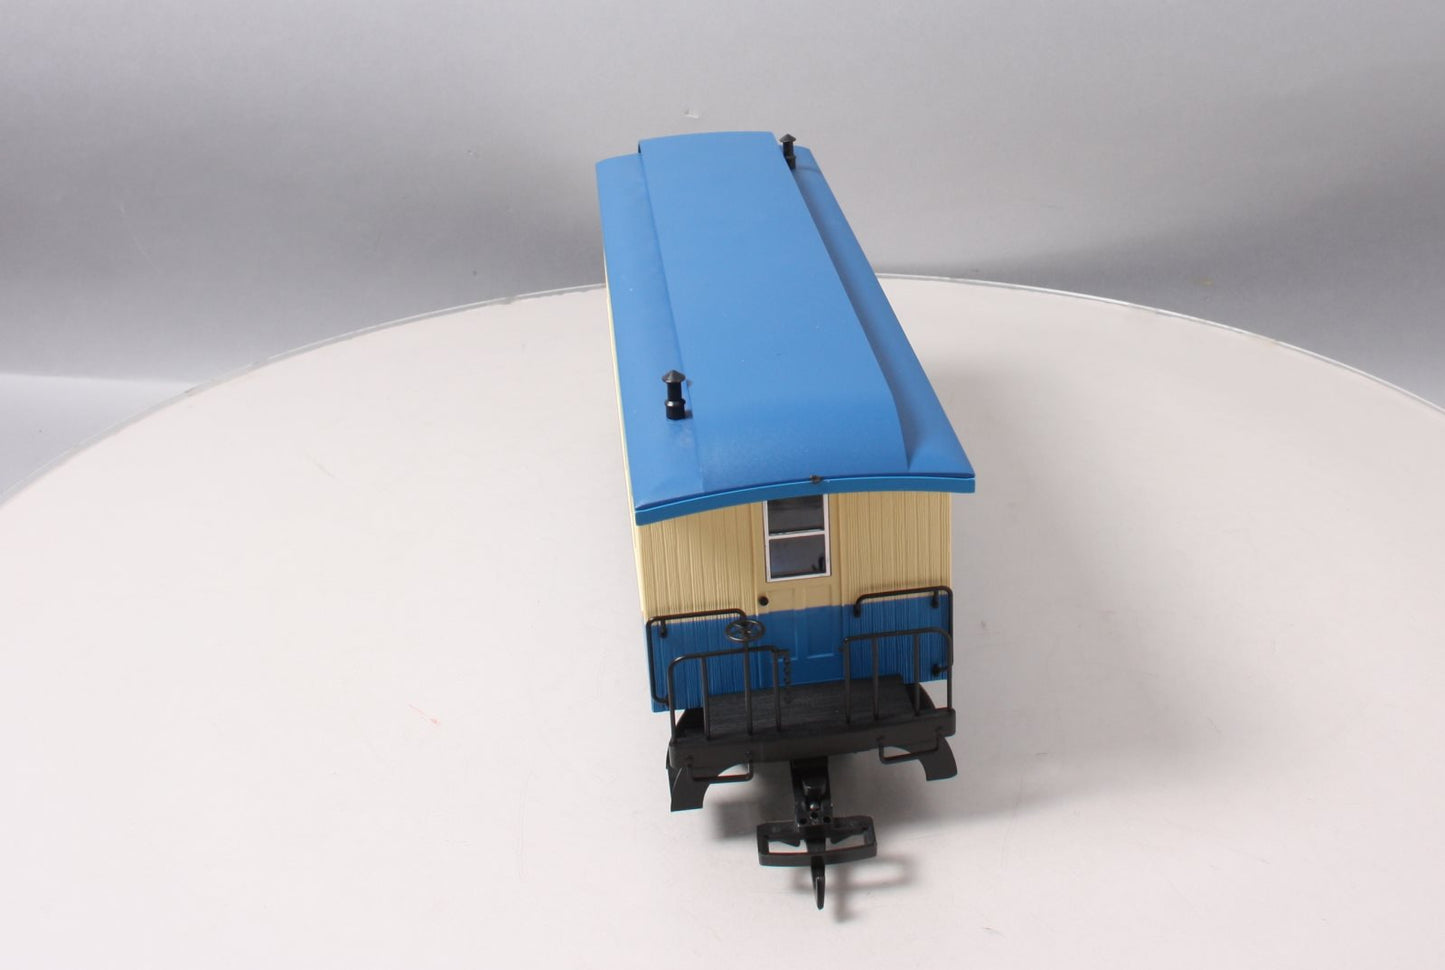 Piko 38620 G Blue Comet Wood Coach #1172